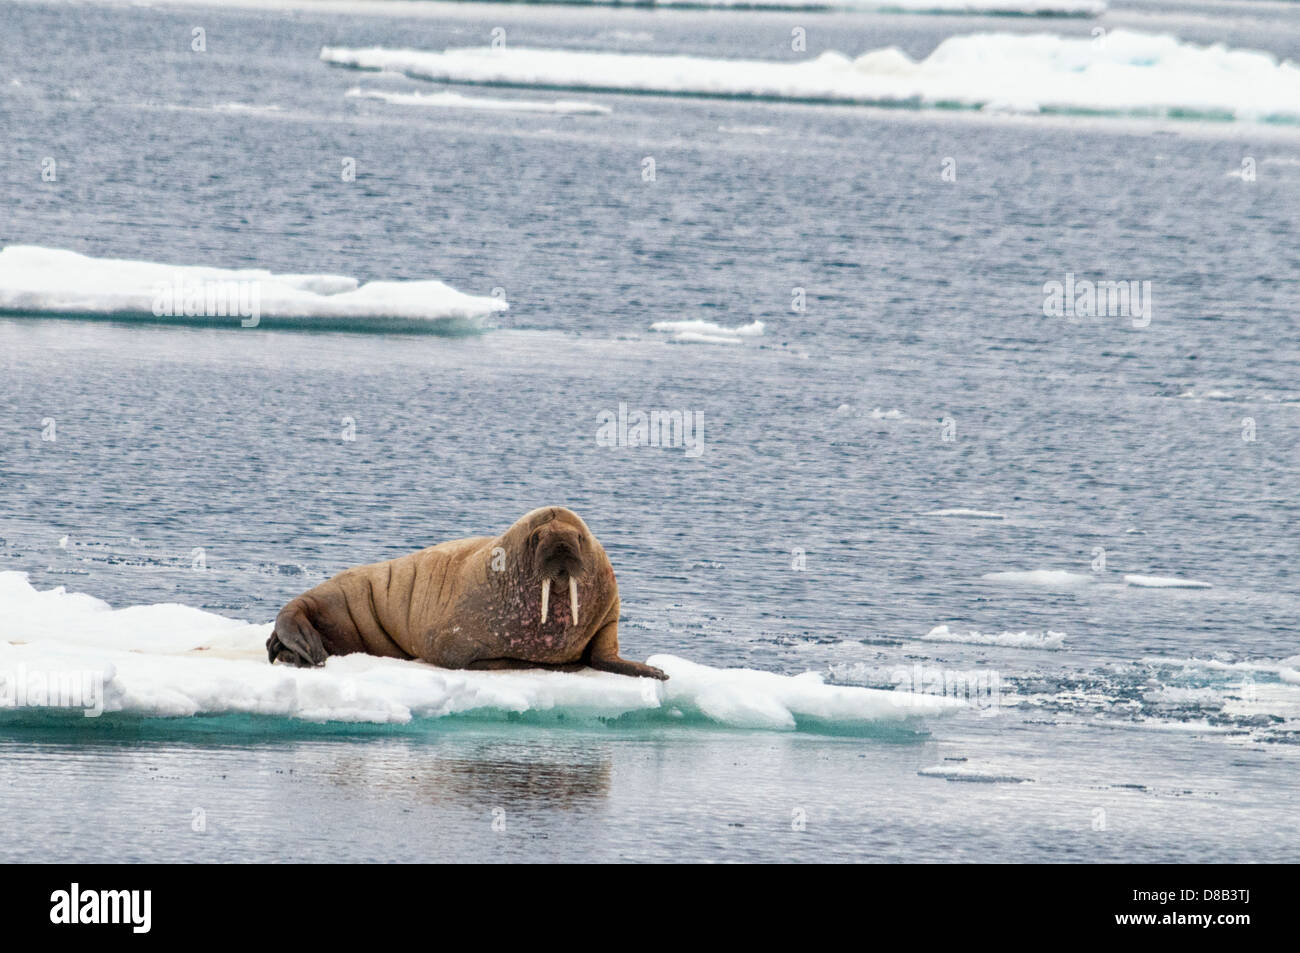 Walrus, Odobenus rosmarus, sitting on a piece of ice, SE of Wilhelmaya, Svalbard Archipelago, Norway Stock Photo